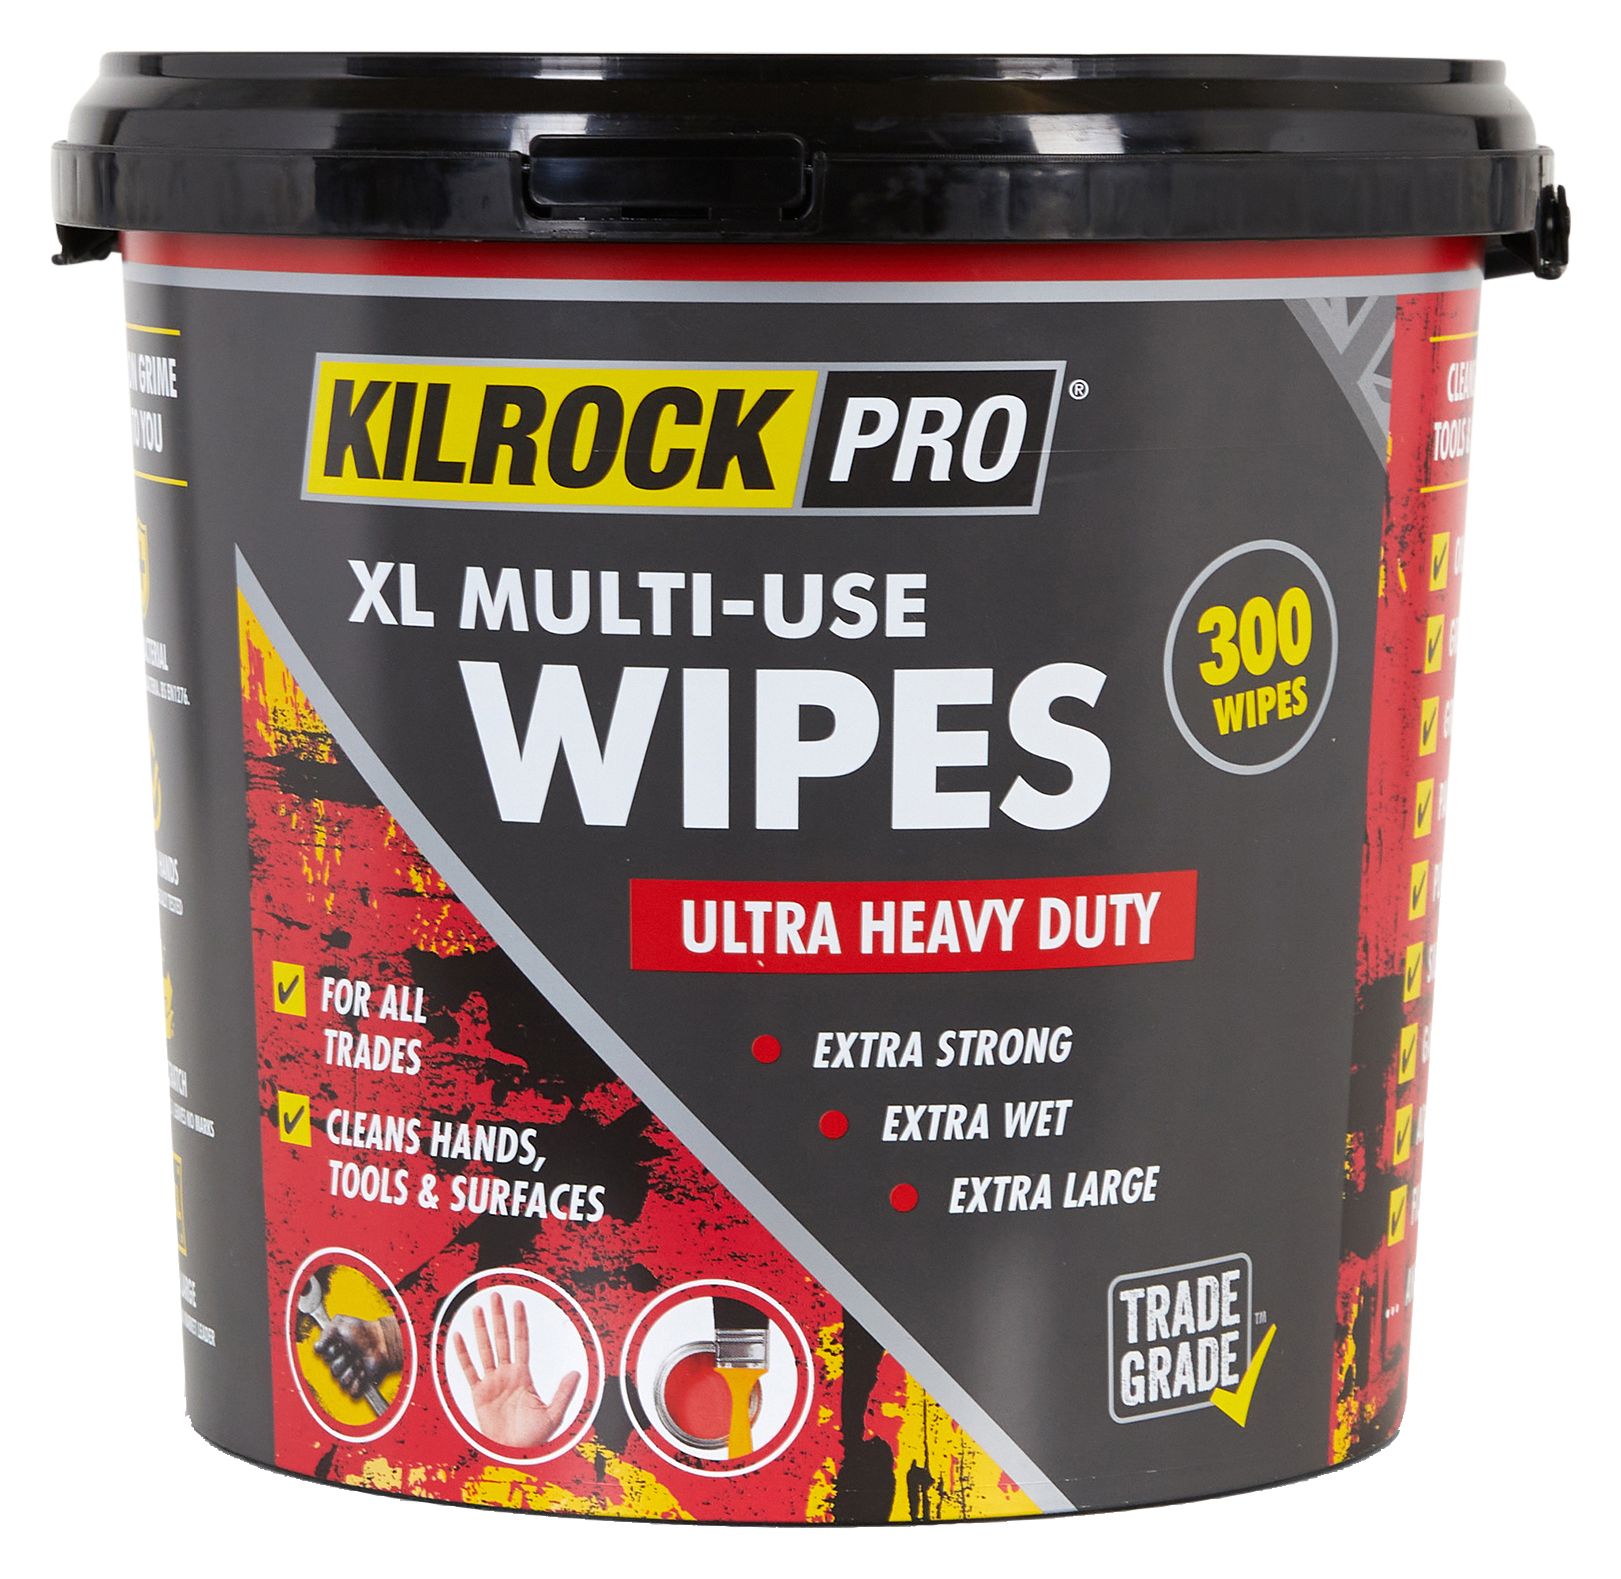 KilrockPRO XL Multi-Use Wipes - Pack of 300